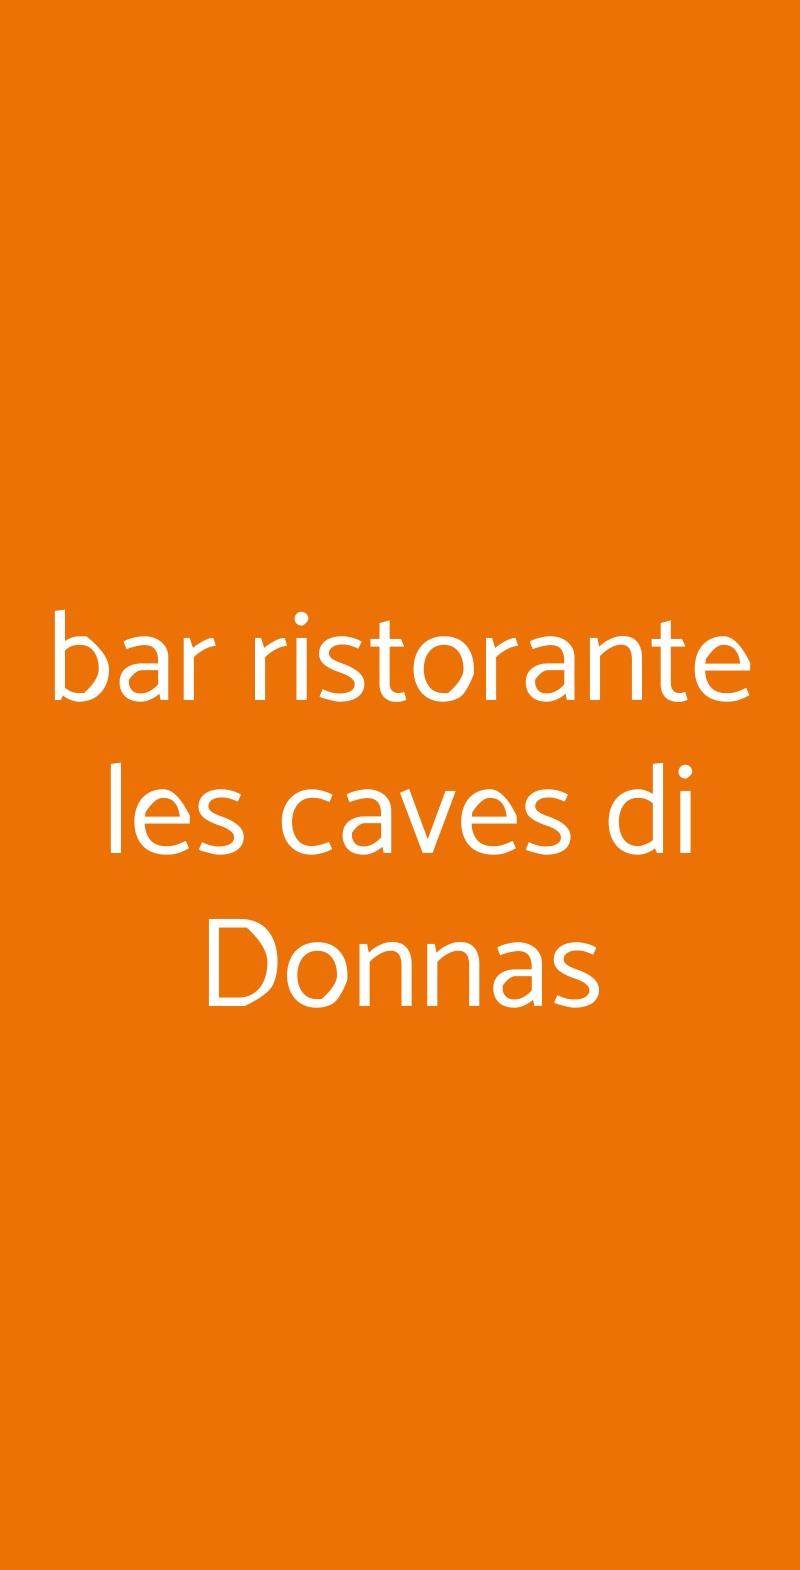 bar ristorante les caves di Donnas Donnas menù 1 pagina